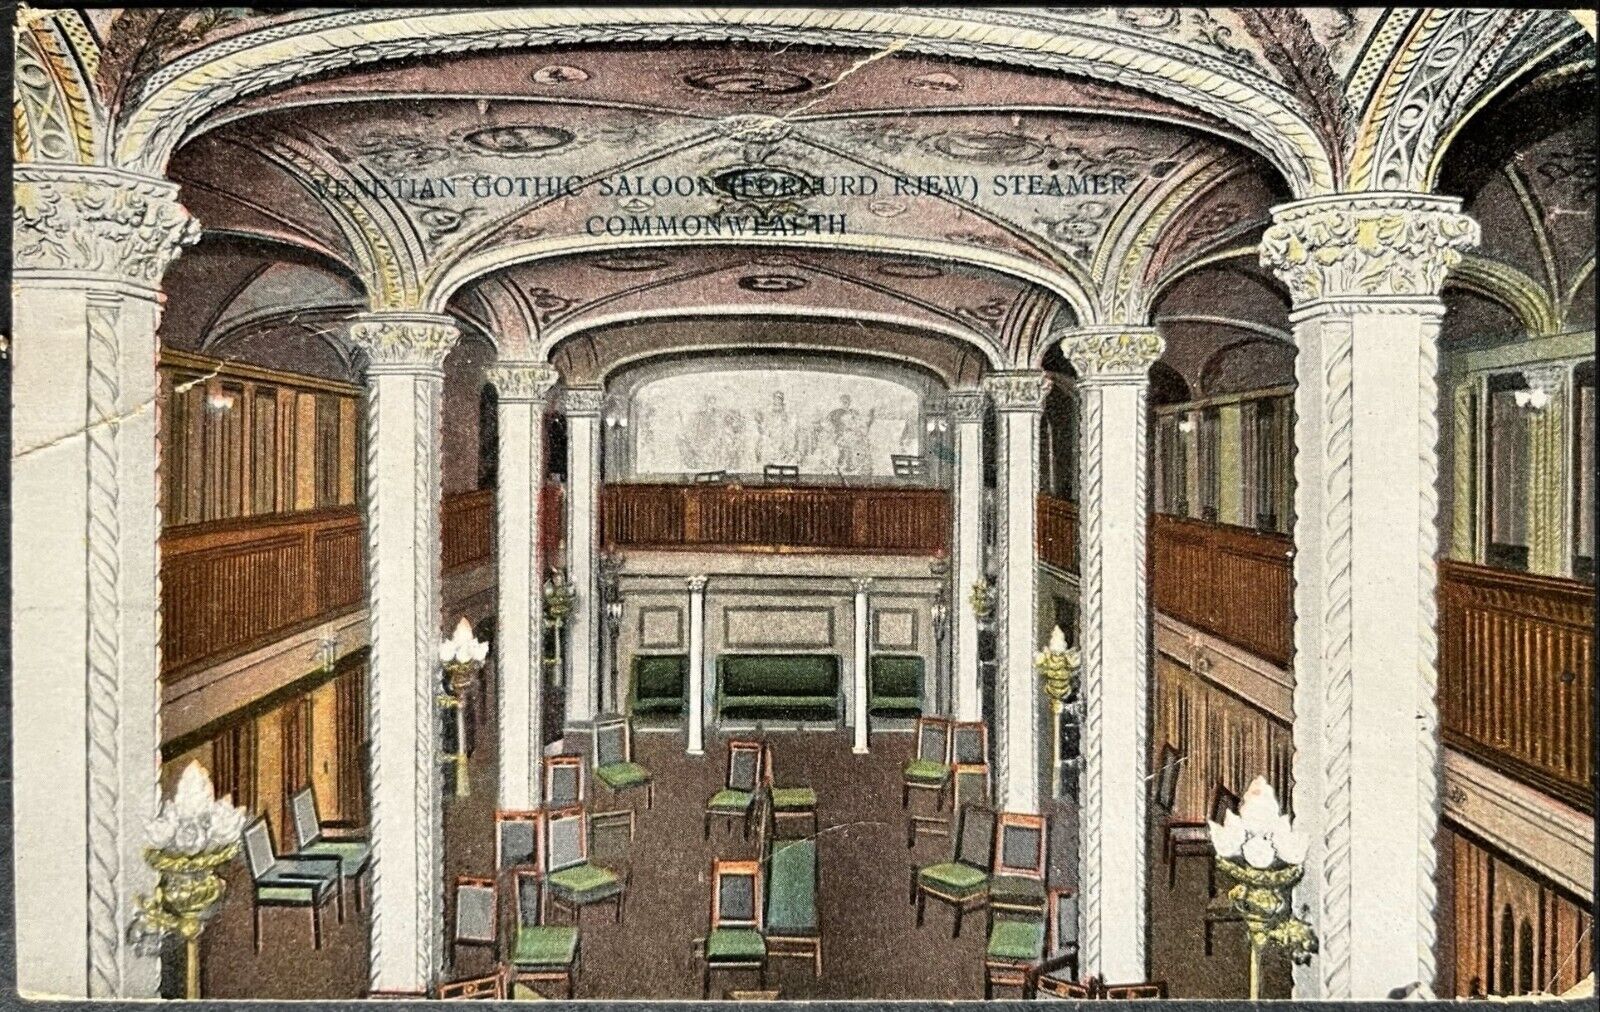 1911 Steamer Commonwealth PC Venetian Gothic Saloon, ship interior